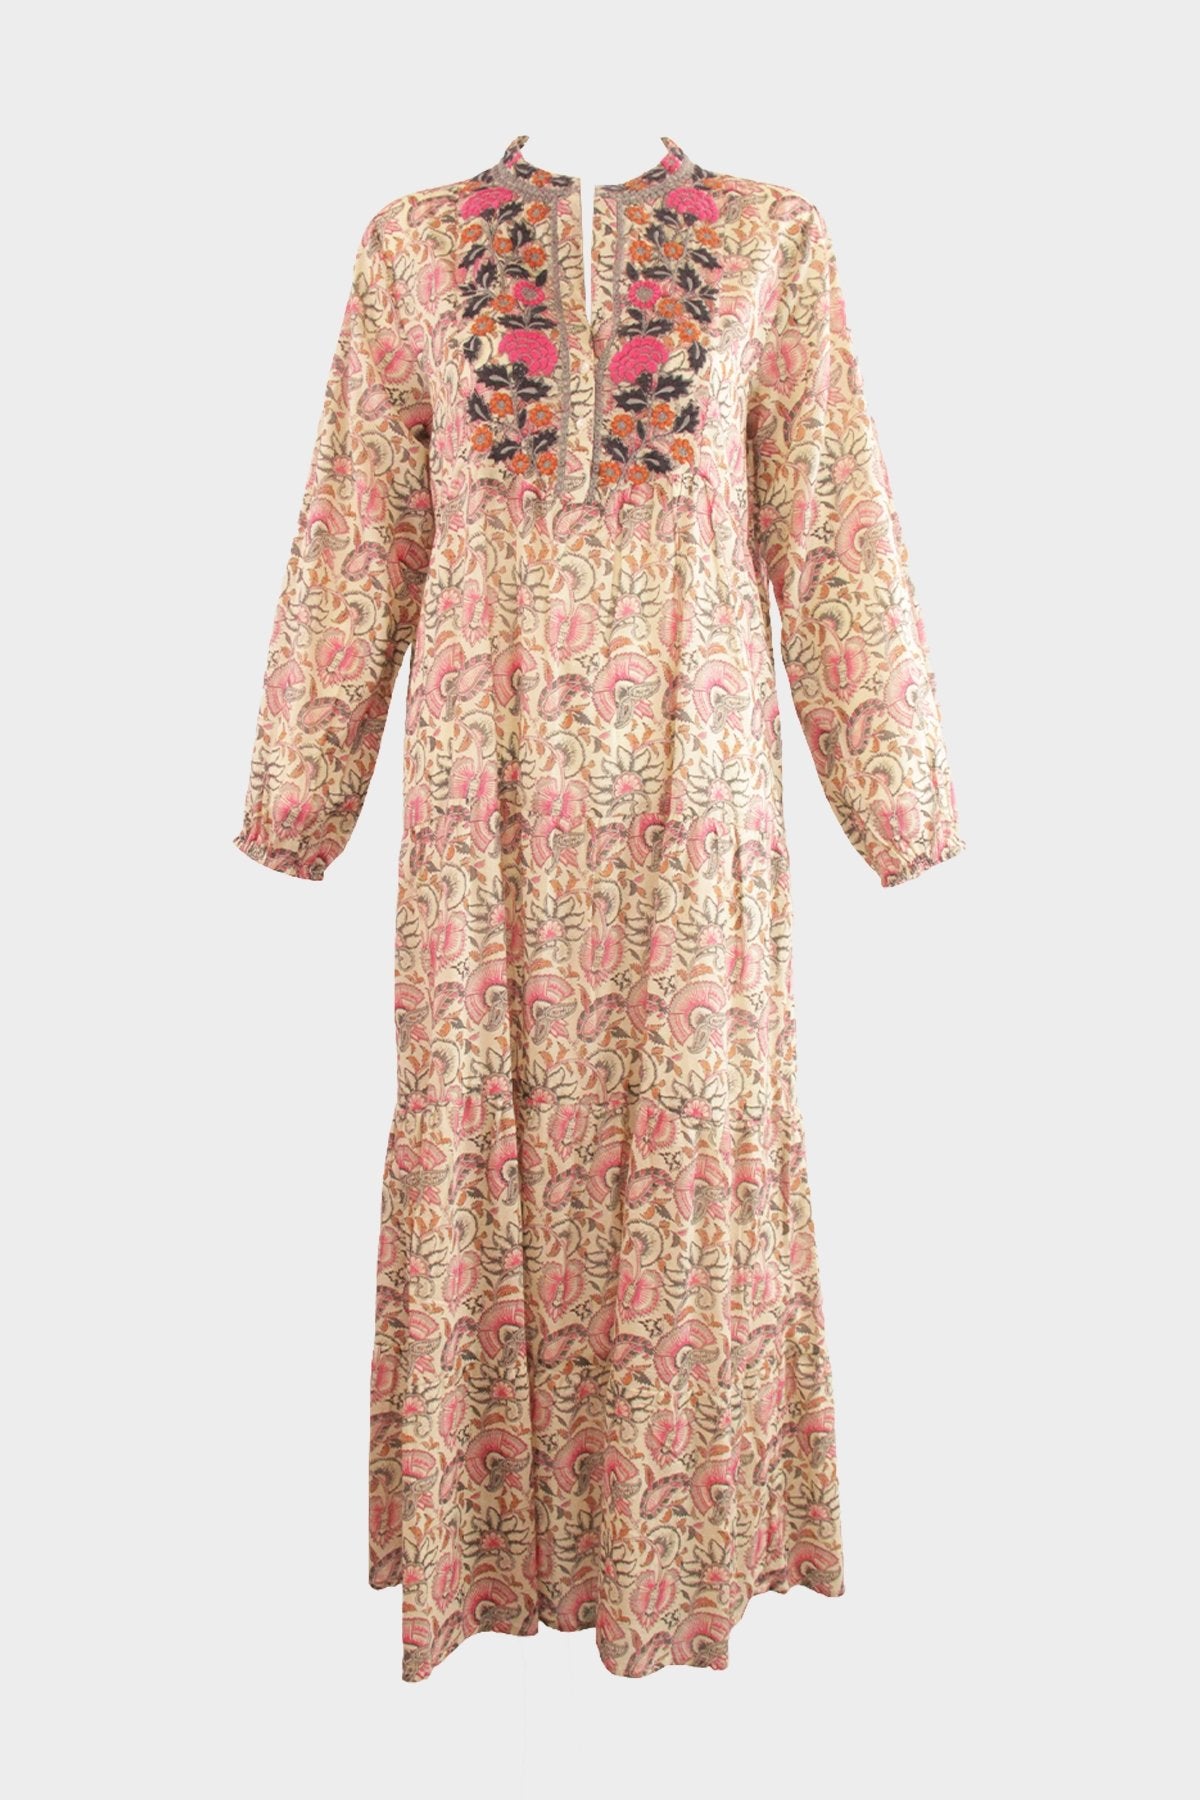 Didi Midi Dress in Clavel Rose - shop-olivia.com